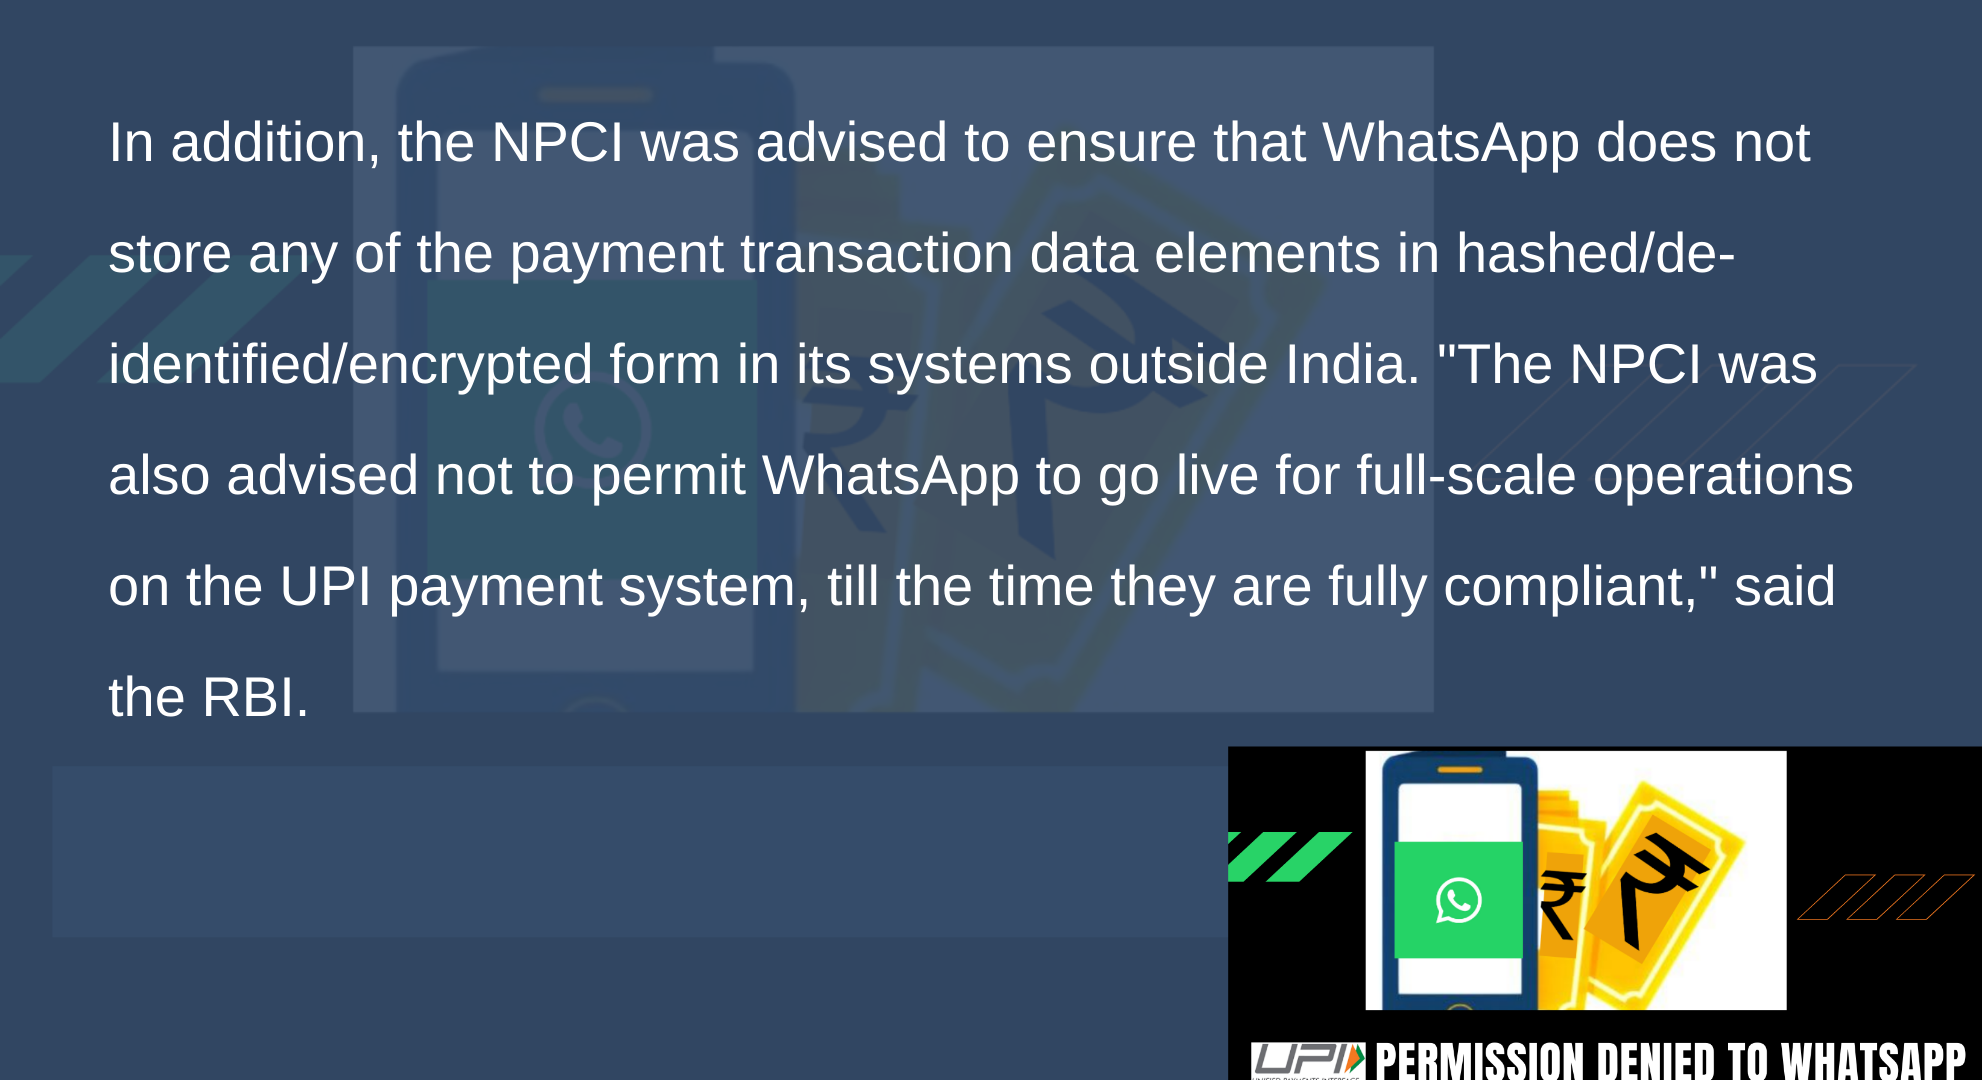 whatsapp pay, rbi, rbi permission on whatsapp pay, latest technology news, ହ୍ବାଟ୍ସଆପ୍‌ ପେ’, ଆରବିଆଇ, ହ୍ବାଟ୍ସଆପ୍‌ ପେ’ ପାଇଁ ଆରବିଆଇ ଅନୁମତି, ଲାଟେଷ୍ଟ ଟେକ୍ନୋଲୋଜି ନ୍ୟୁଜ୍‌